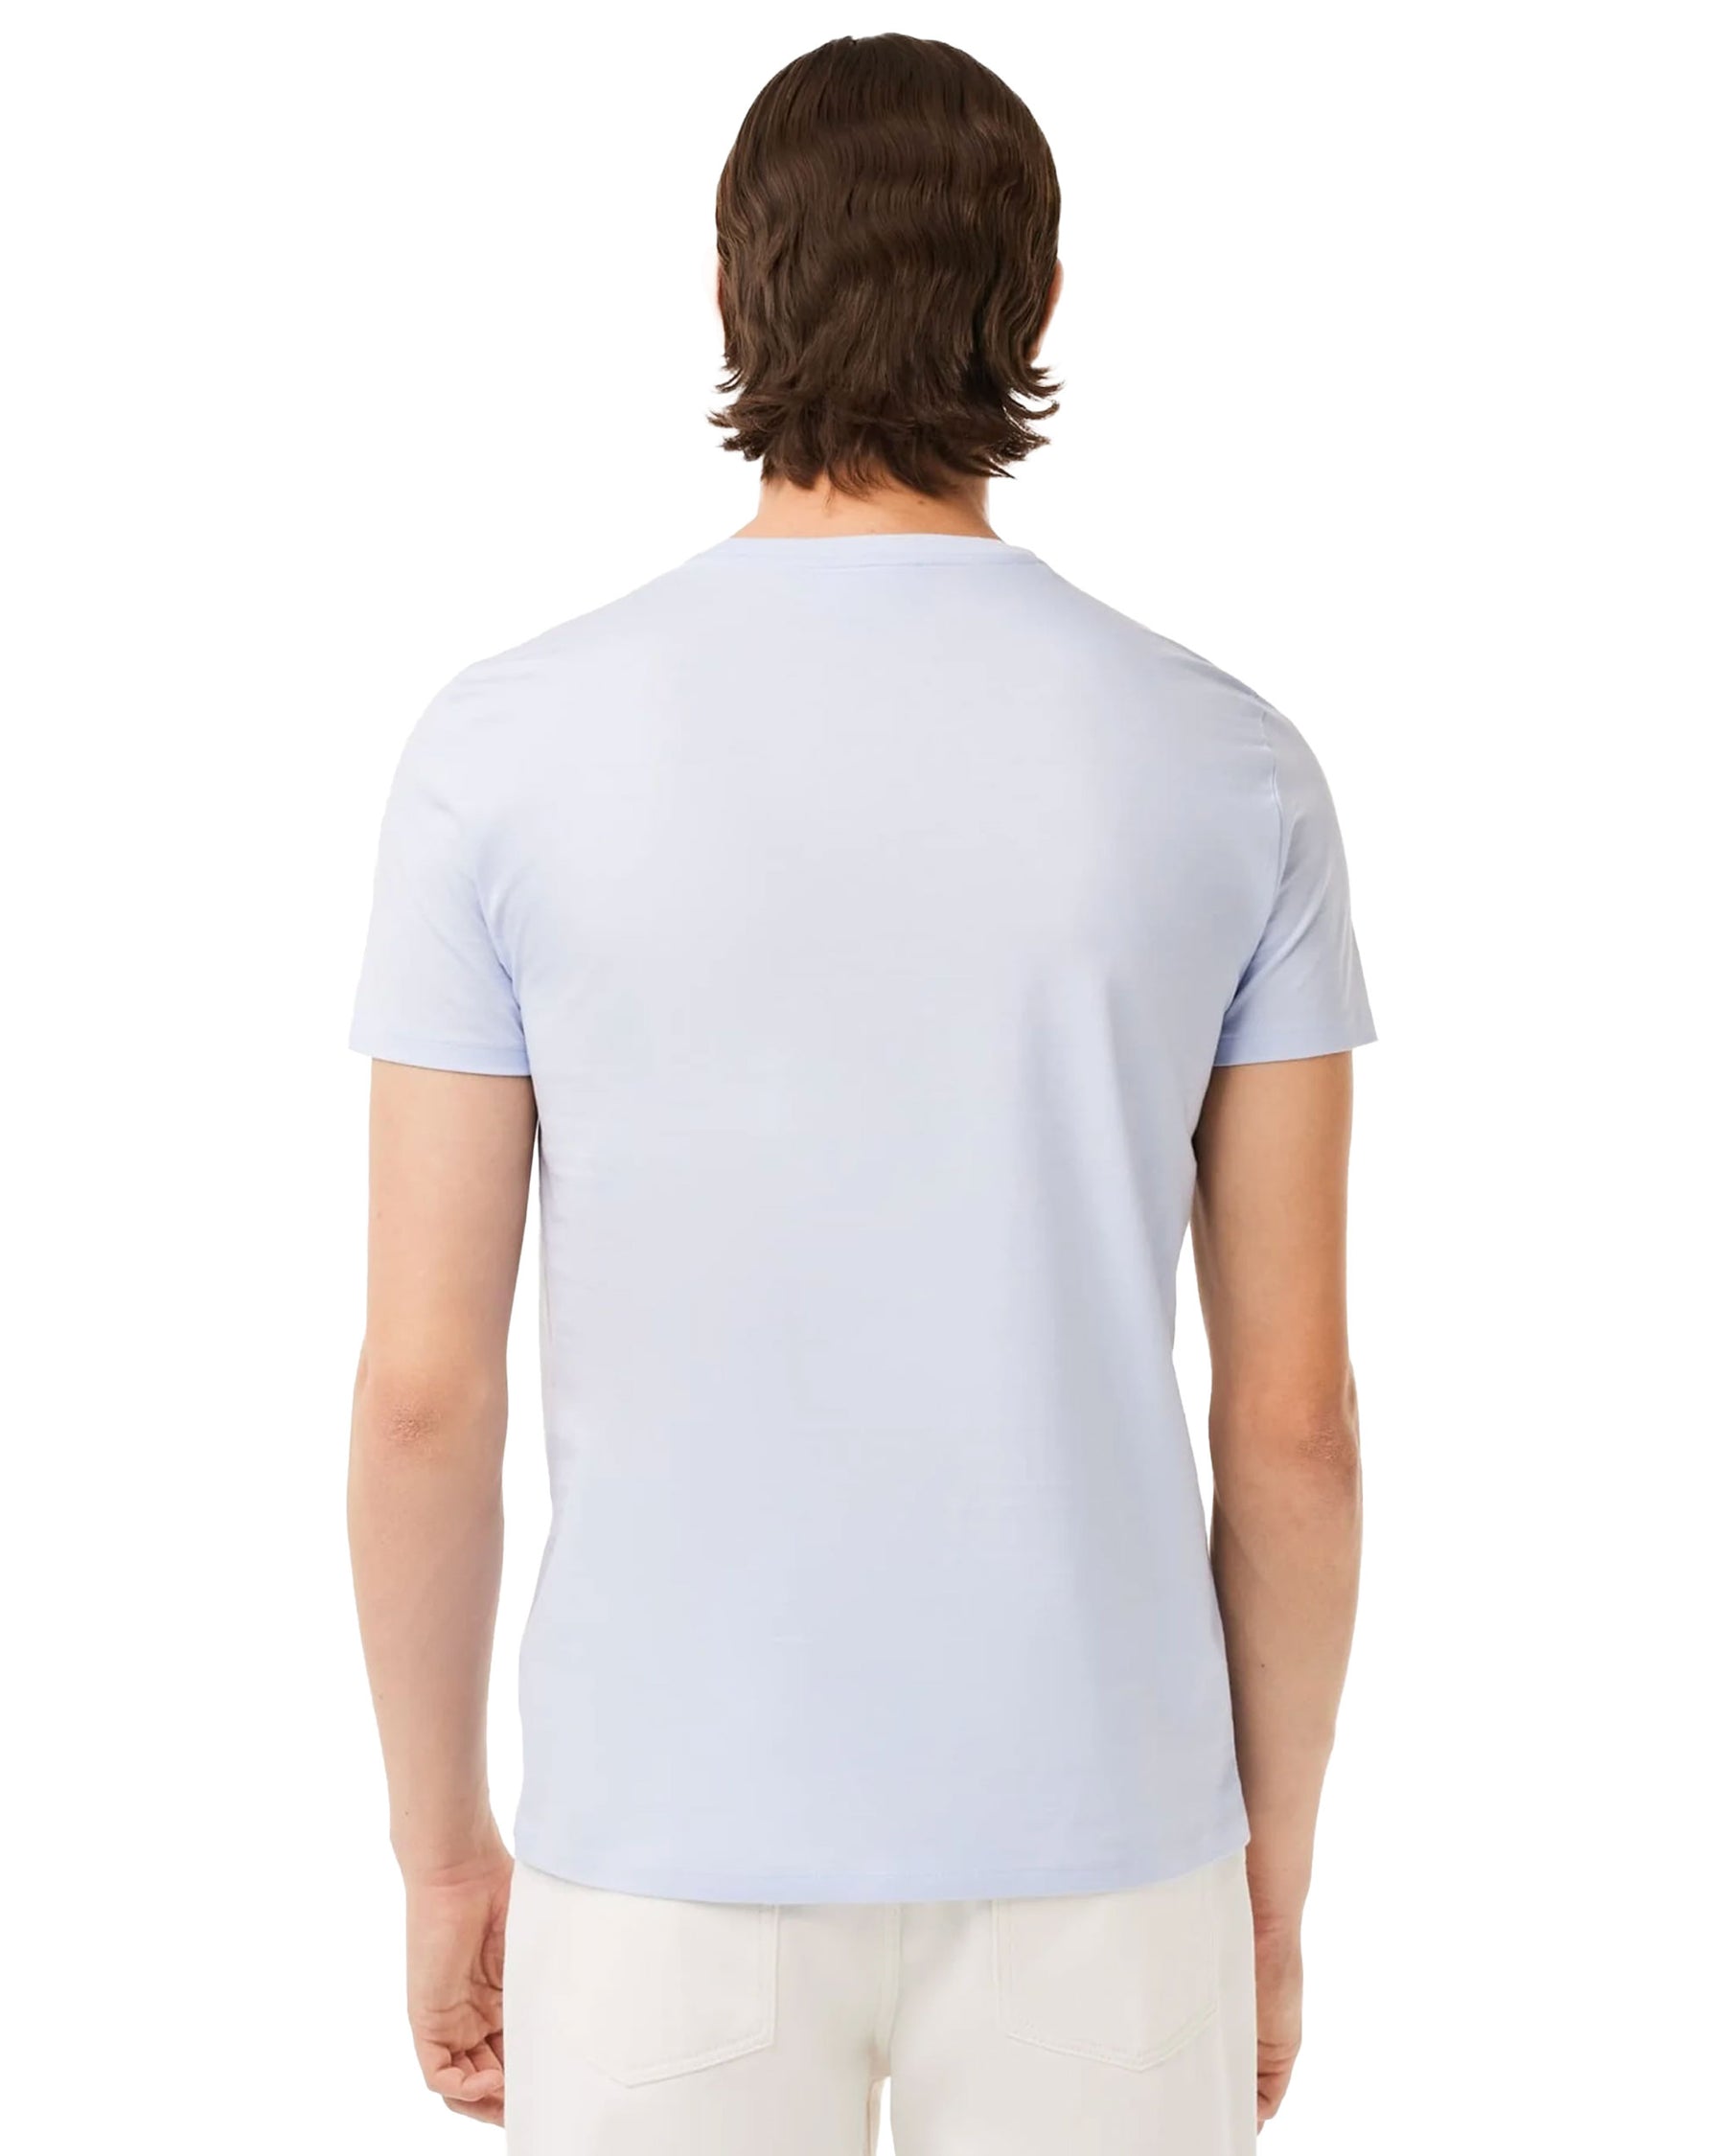 T-Shirt Uomo Lacoste Classic Logo Celeste